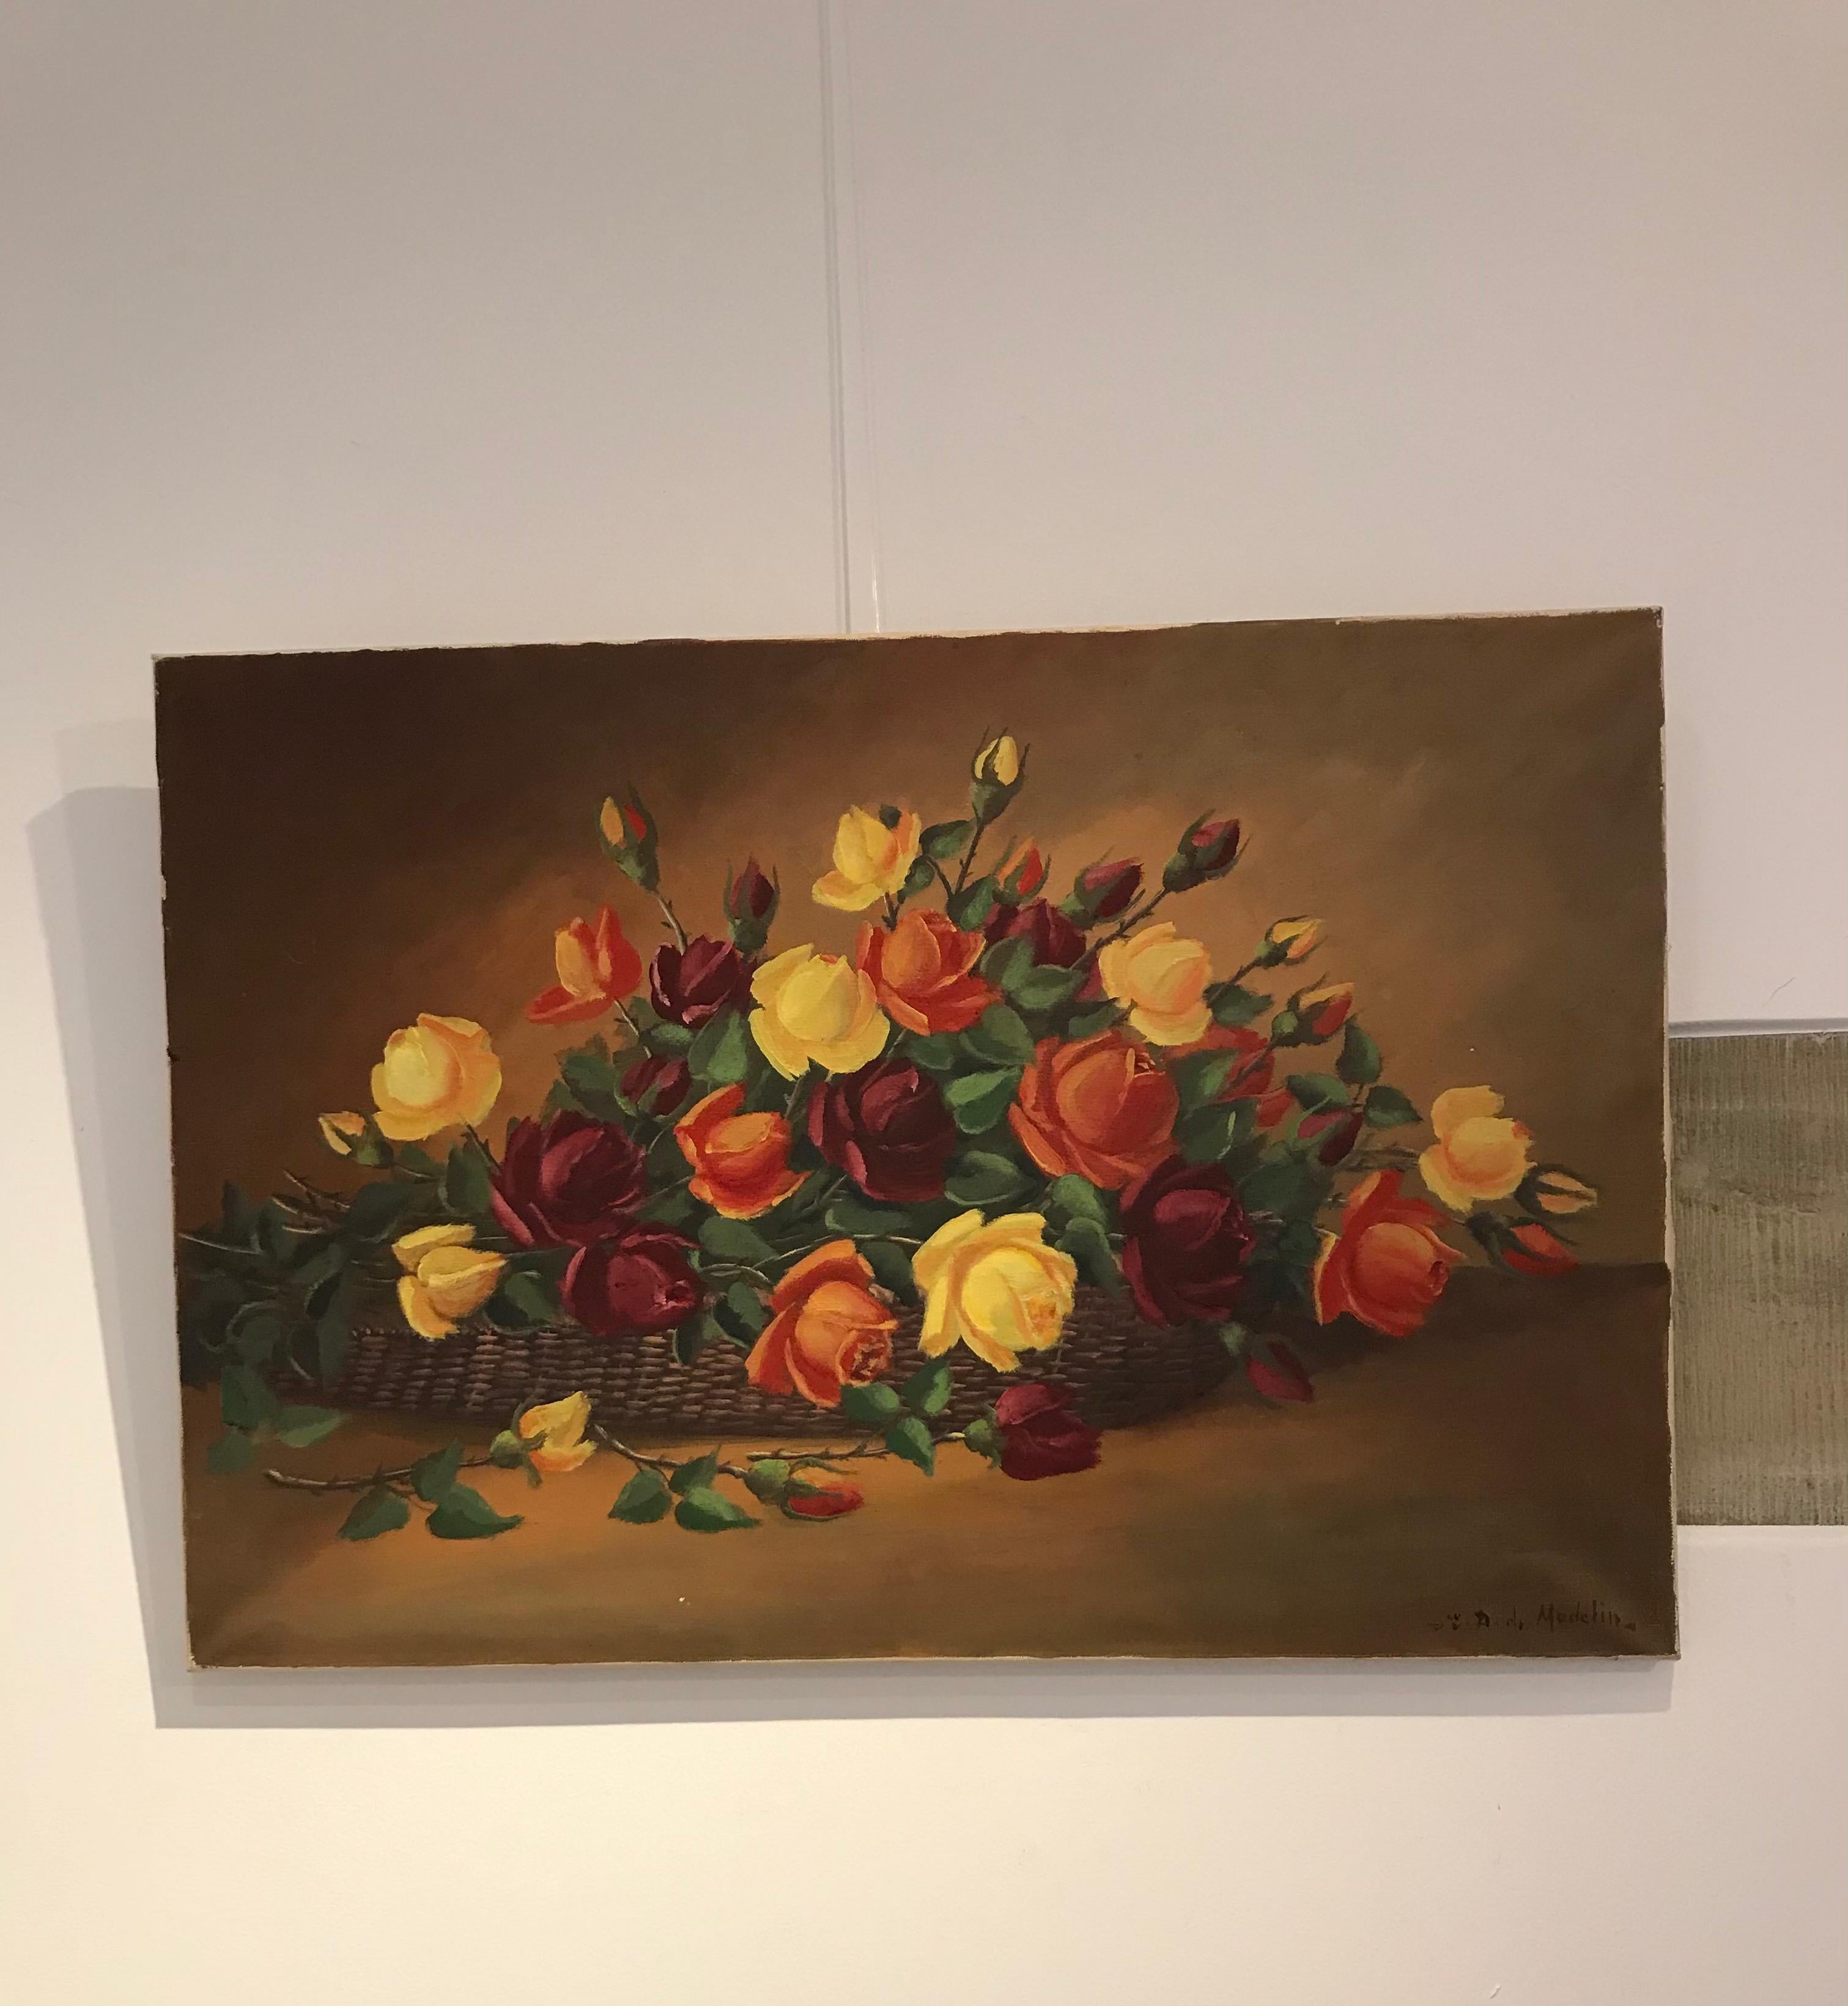 Basket of roses by Eugène Devaud de Madelain - Oil on canvas - Painting by Eugène Devaud De Madelain